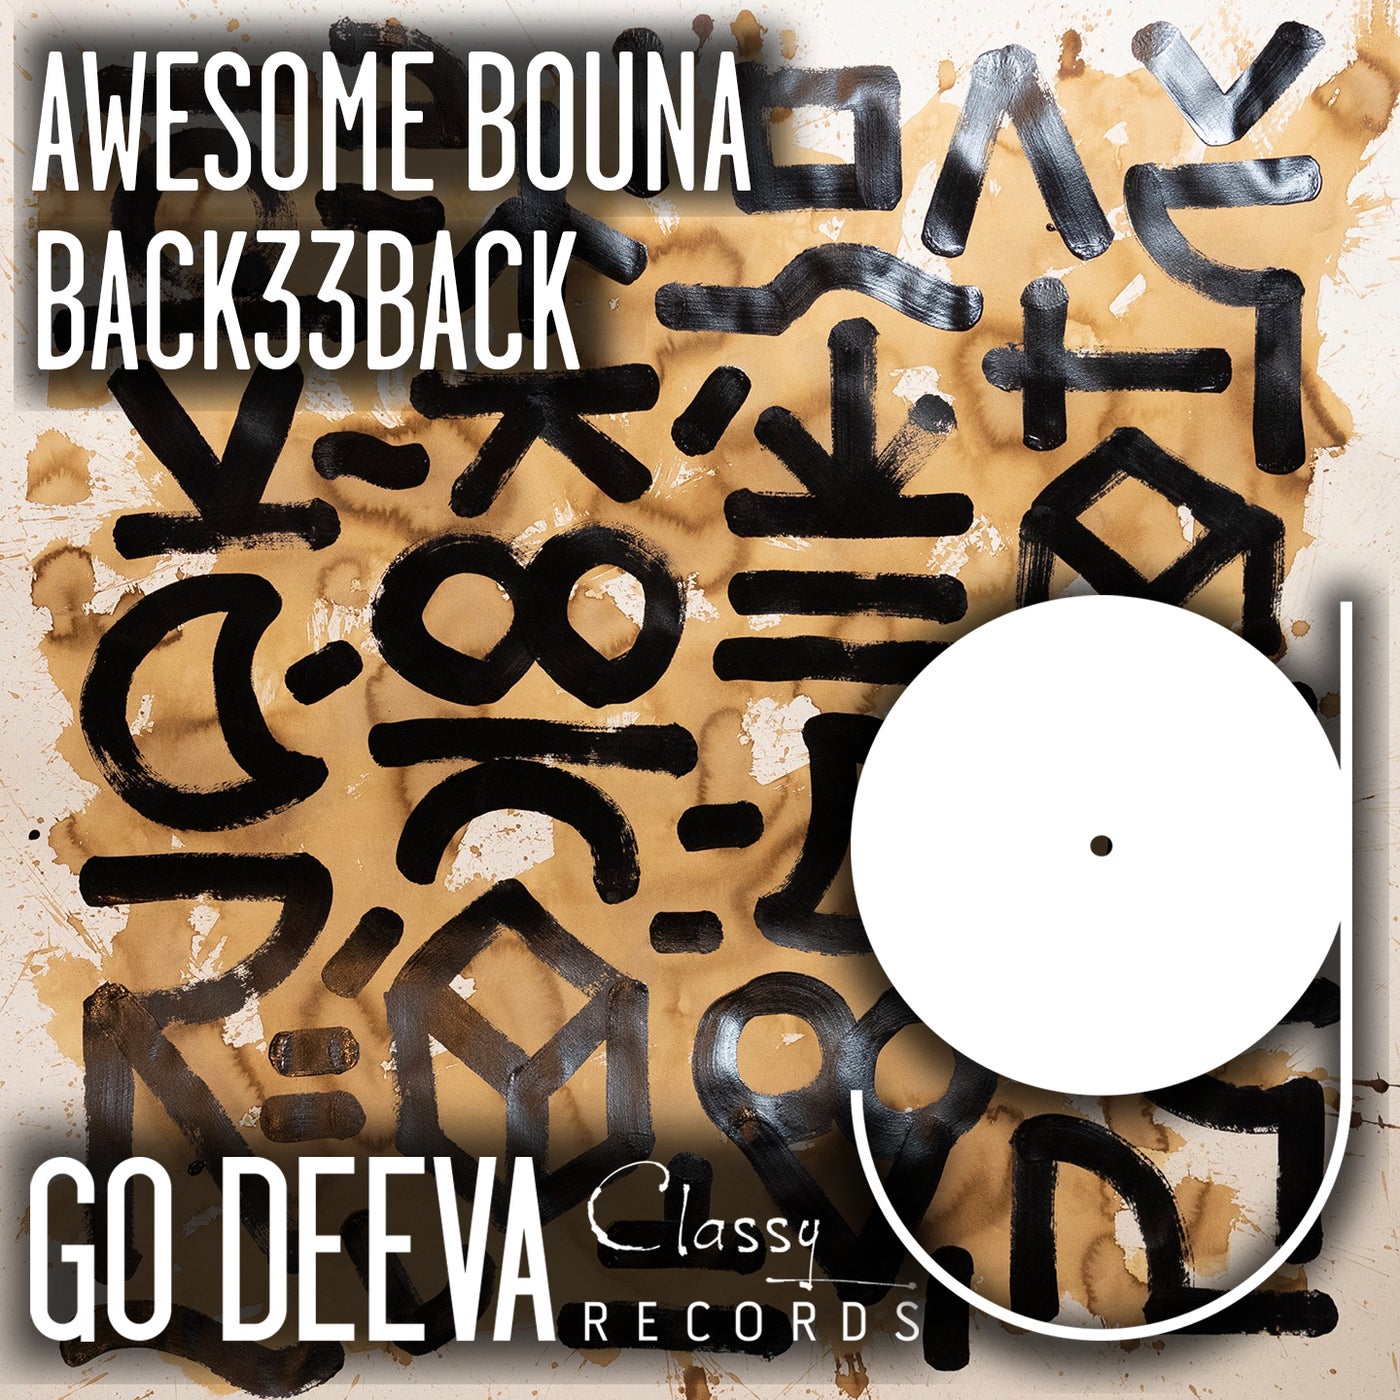 Back33back – Awesome Bouna [GDC066]